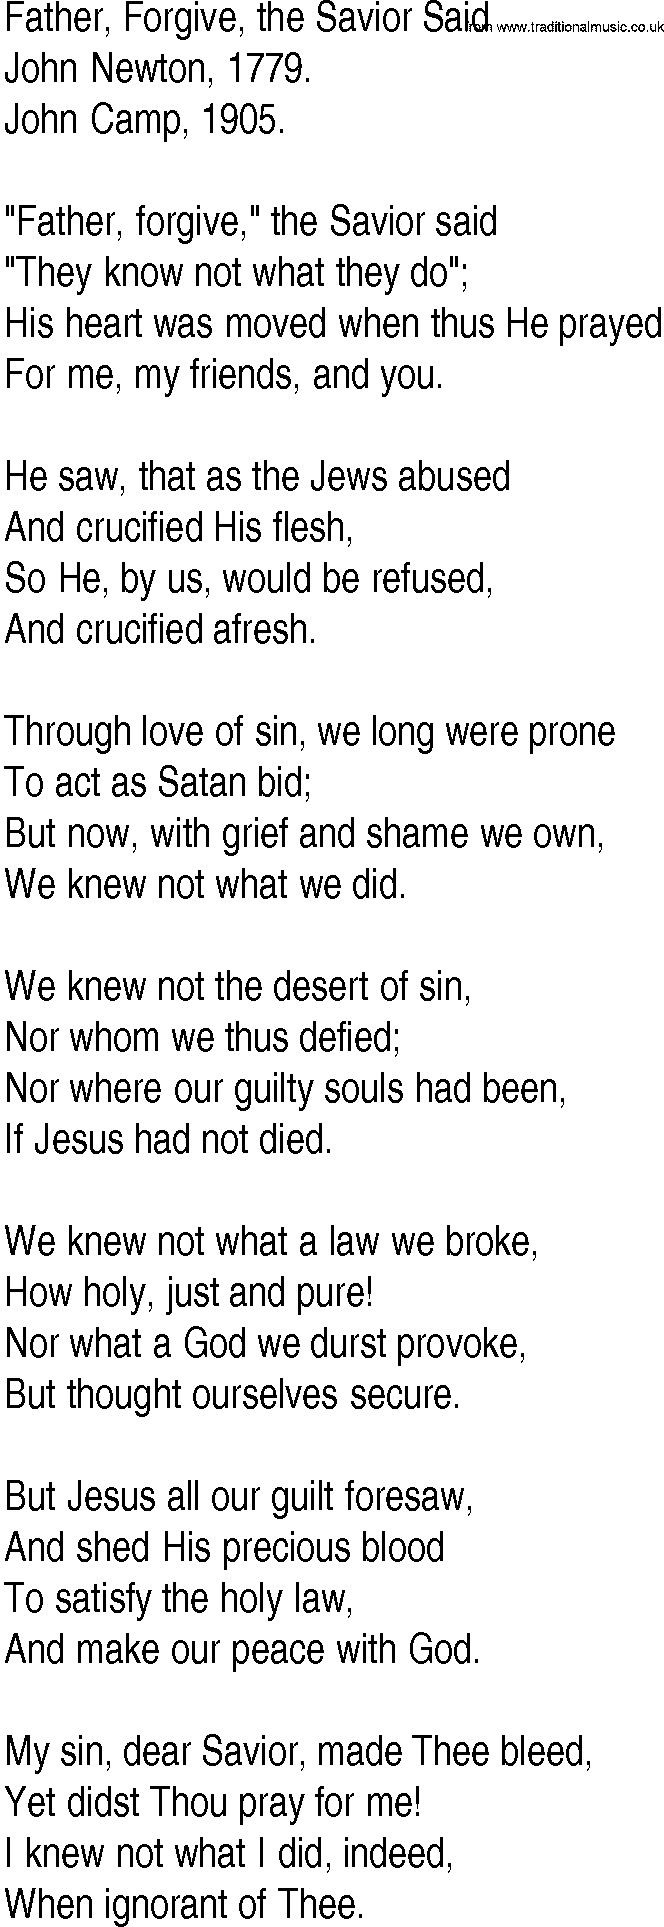 Hymn and Gospel Song: Father, Forgive, the Savior Said by John Newton lyrics